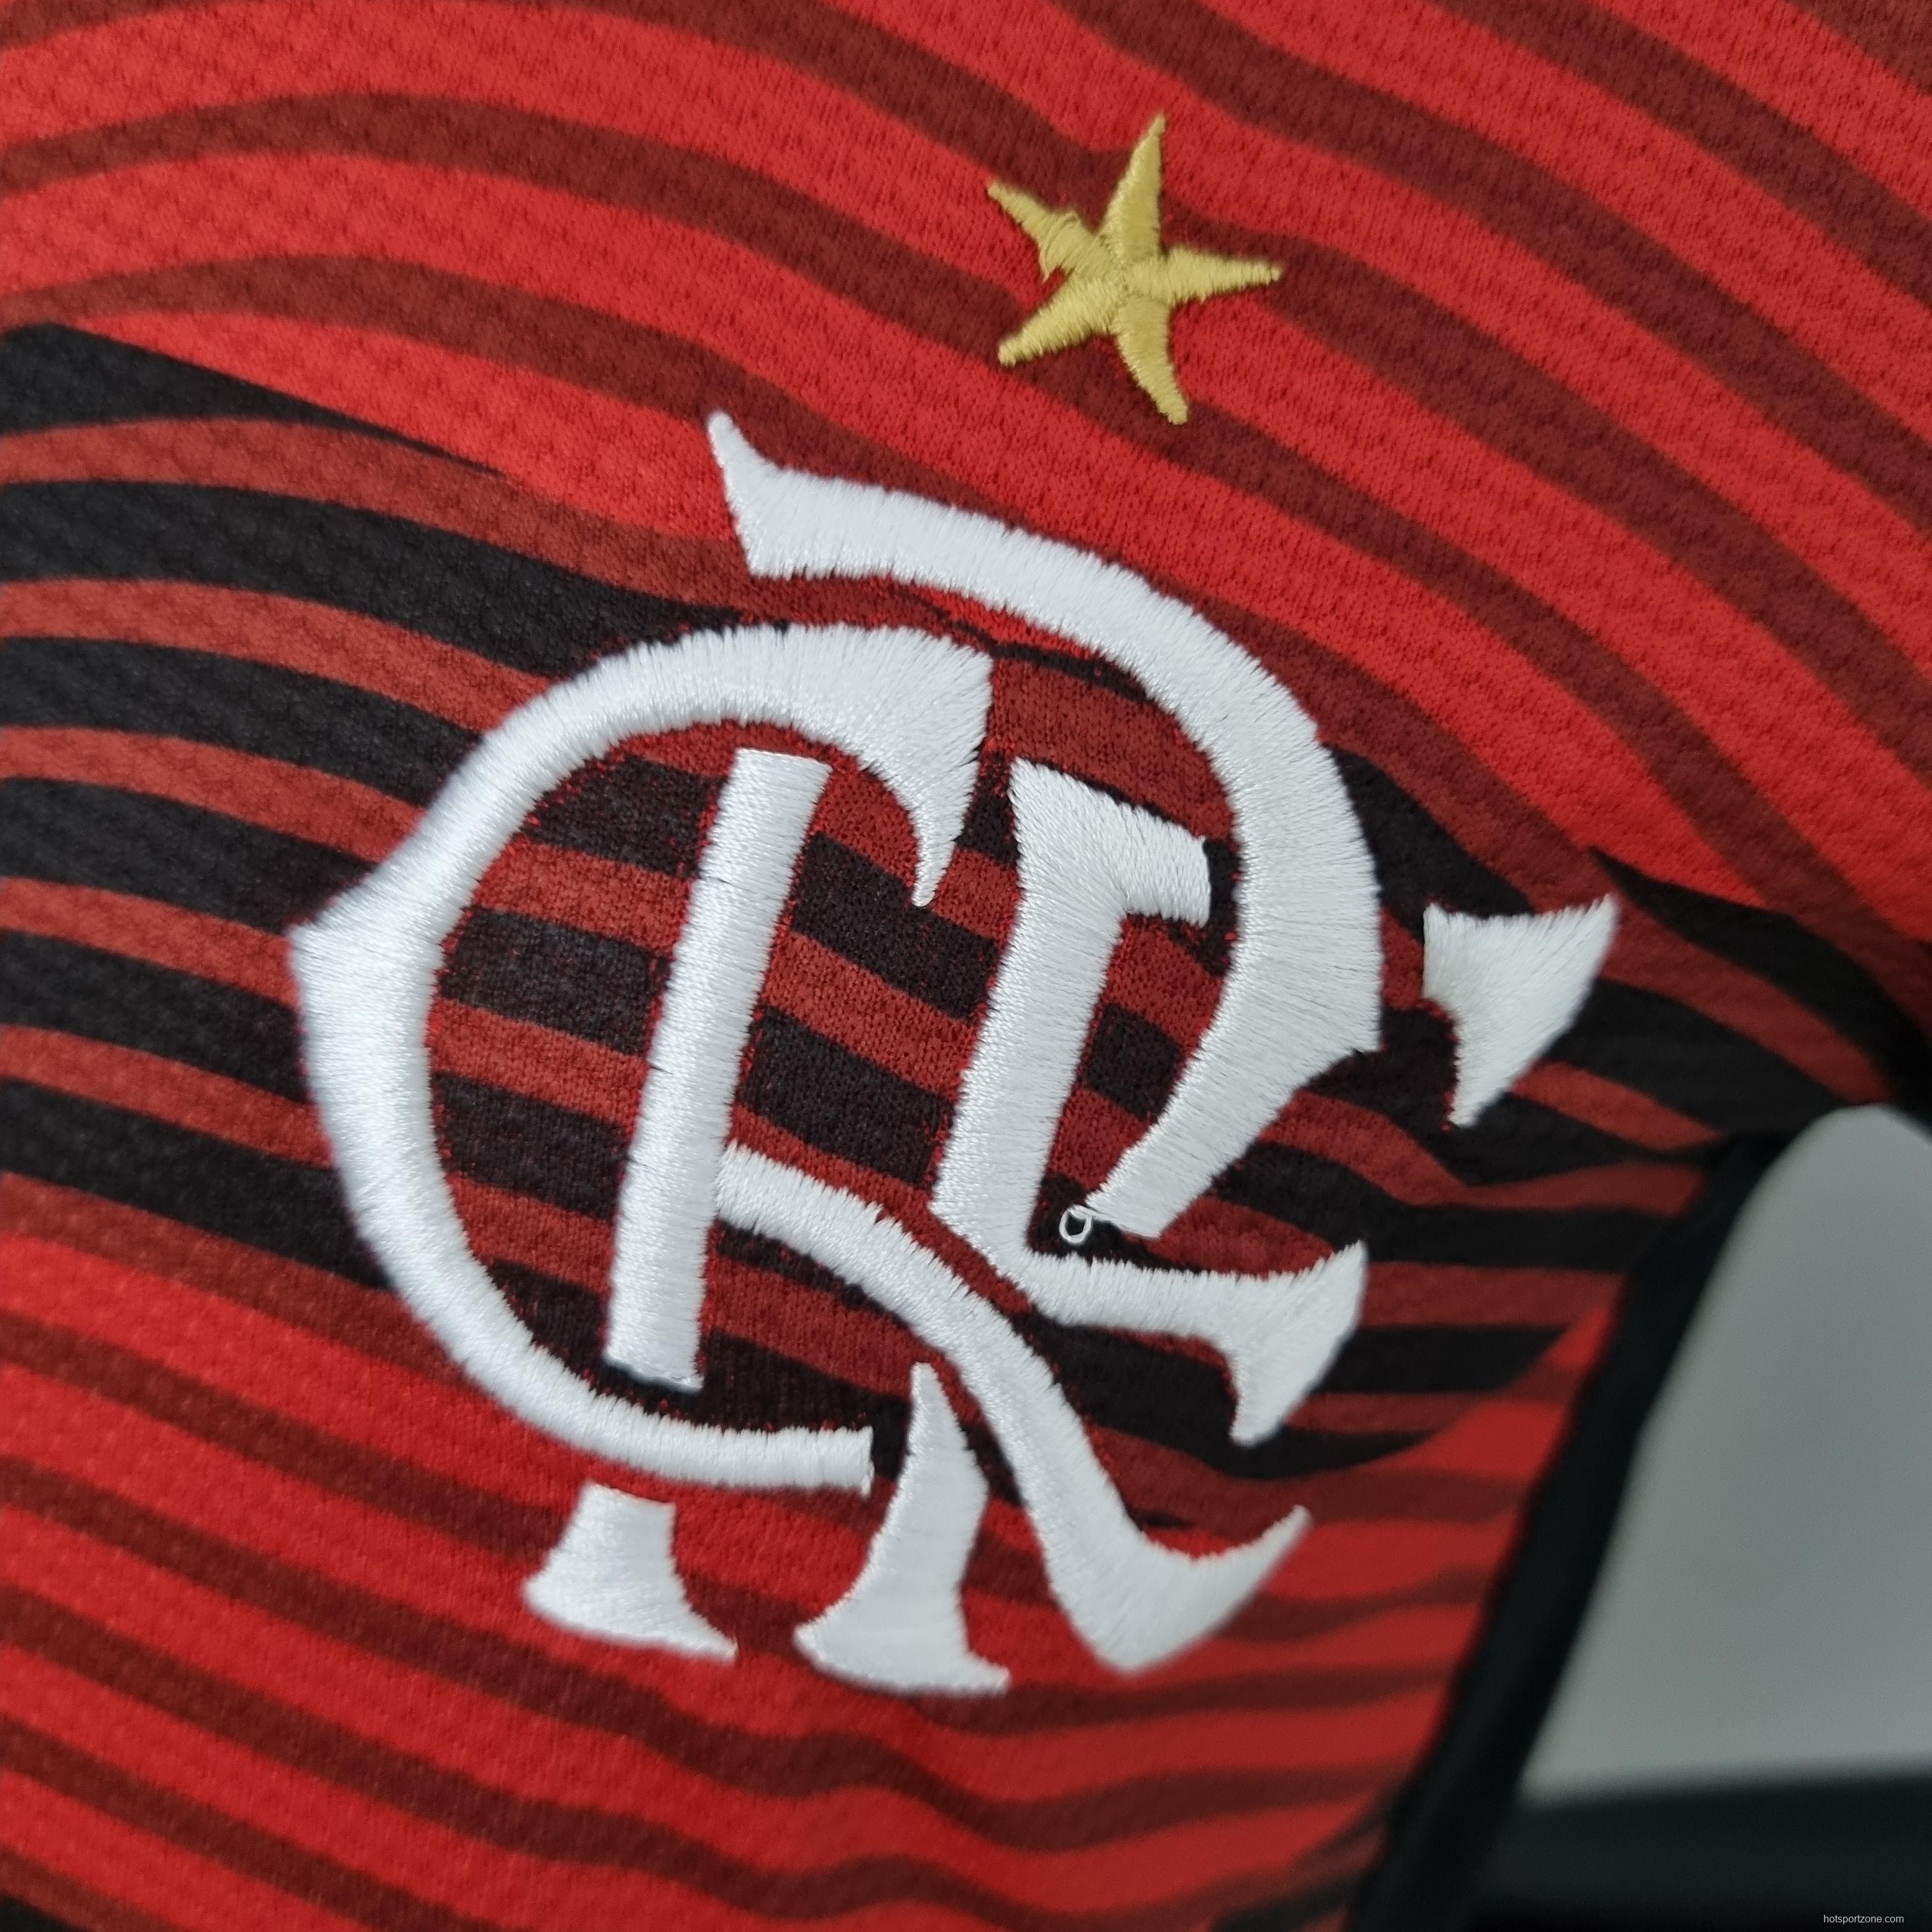 22/23 Flamengo kids home Soccer Jersey